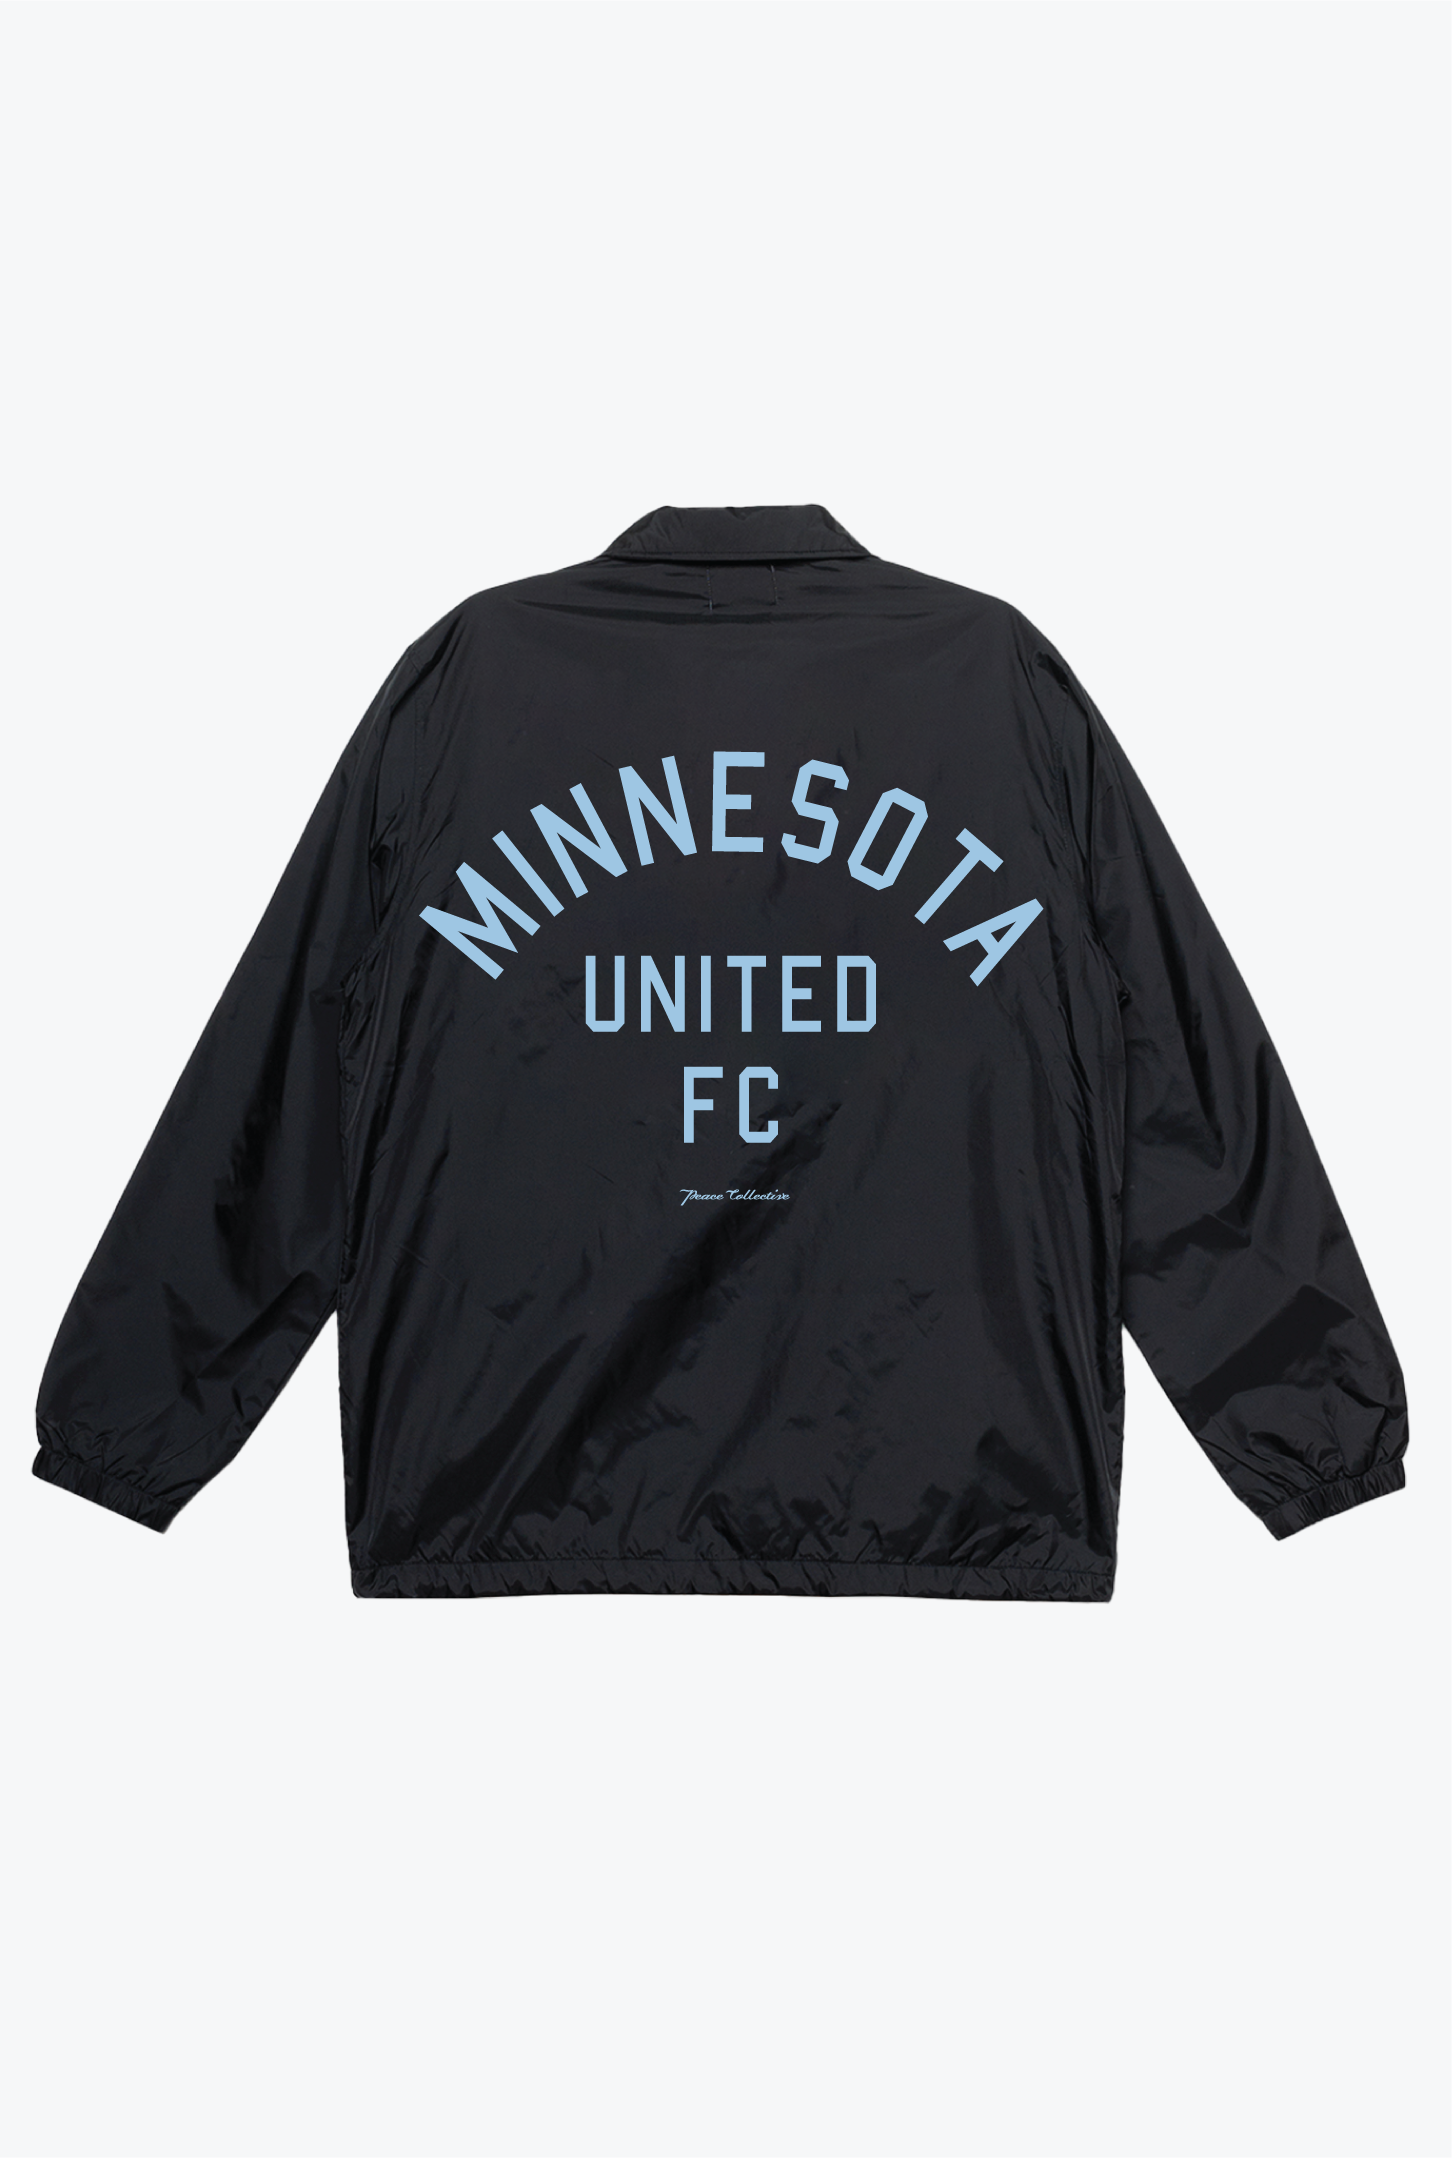 Minnesota United FC Essentials Coach Jacket - Black